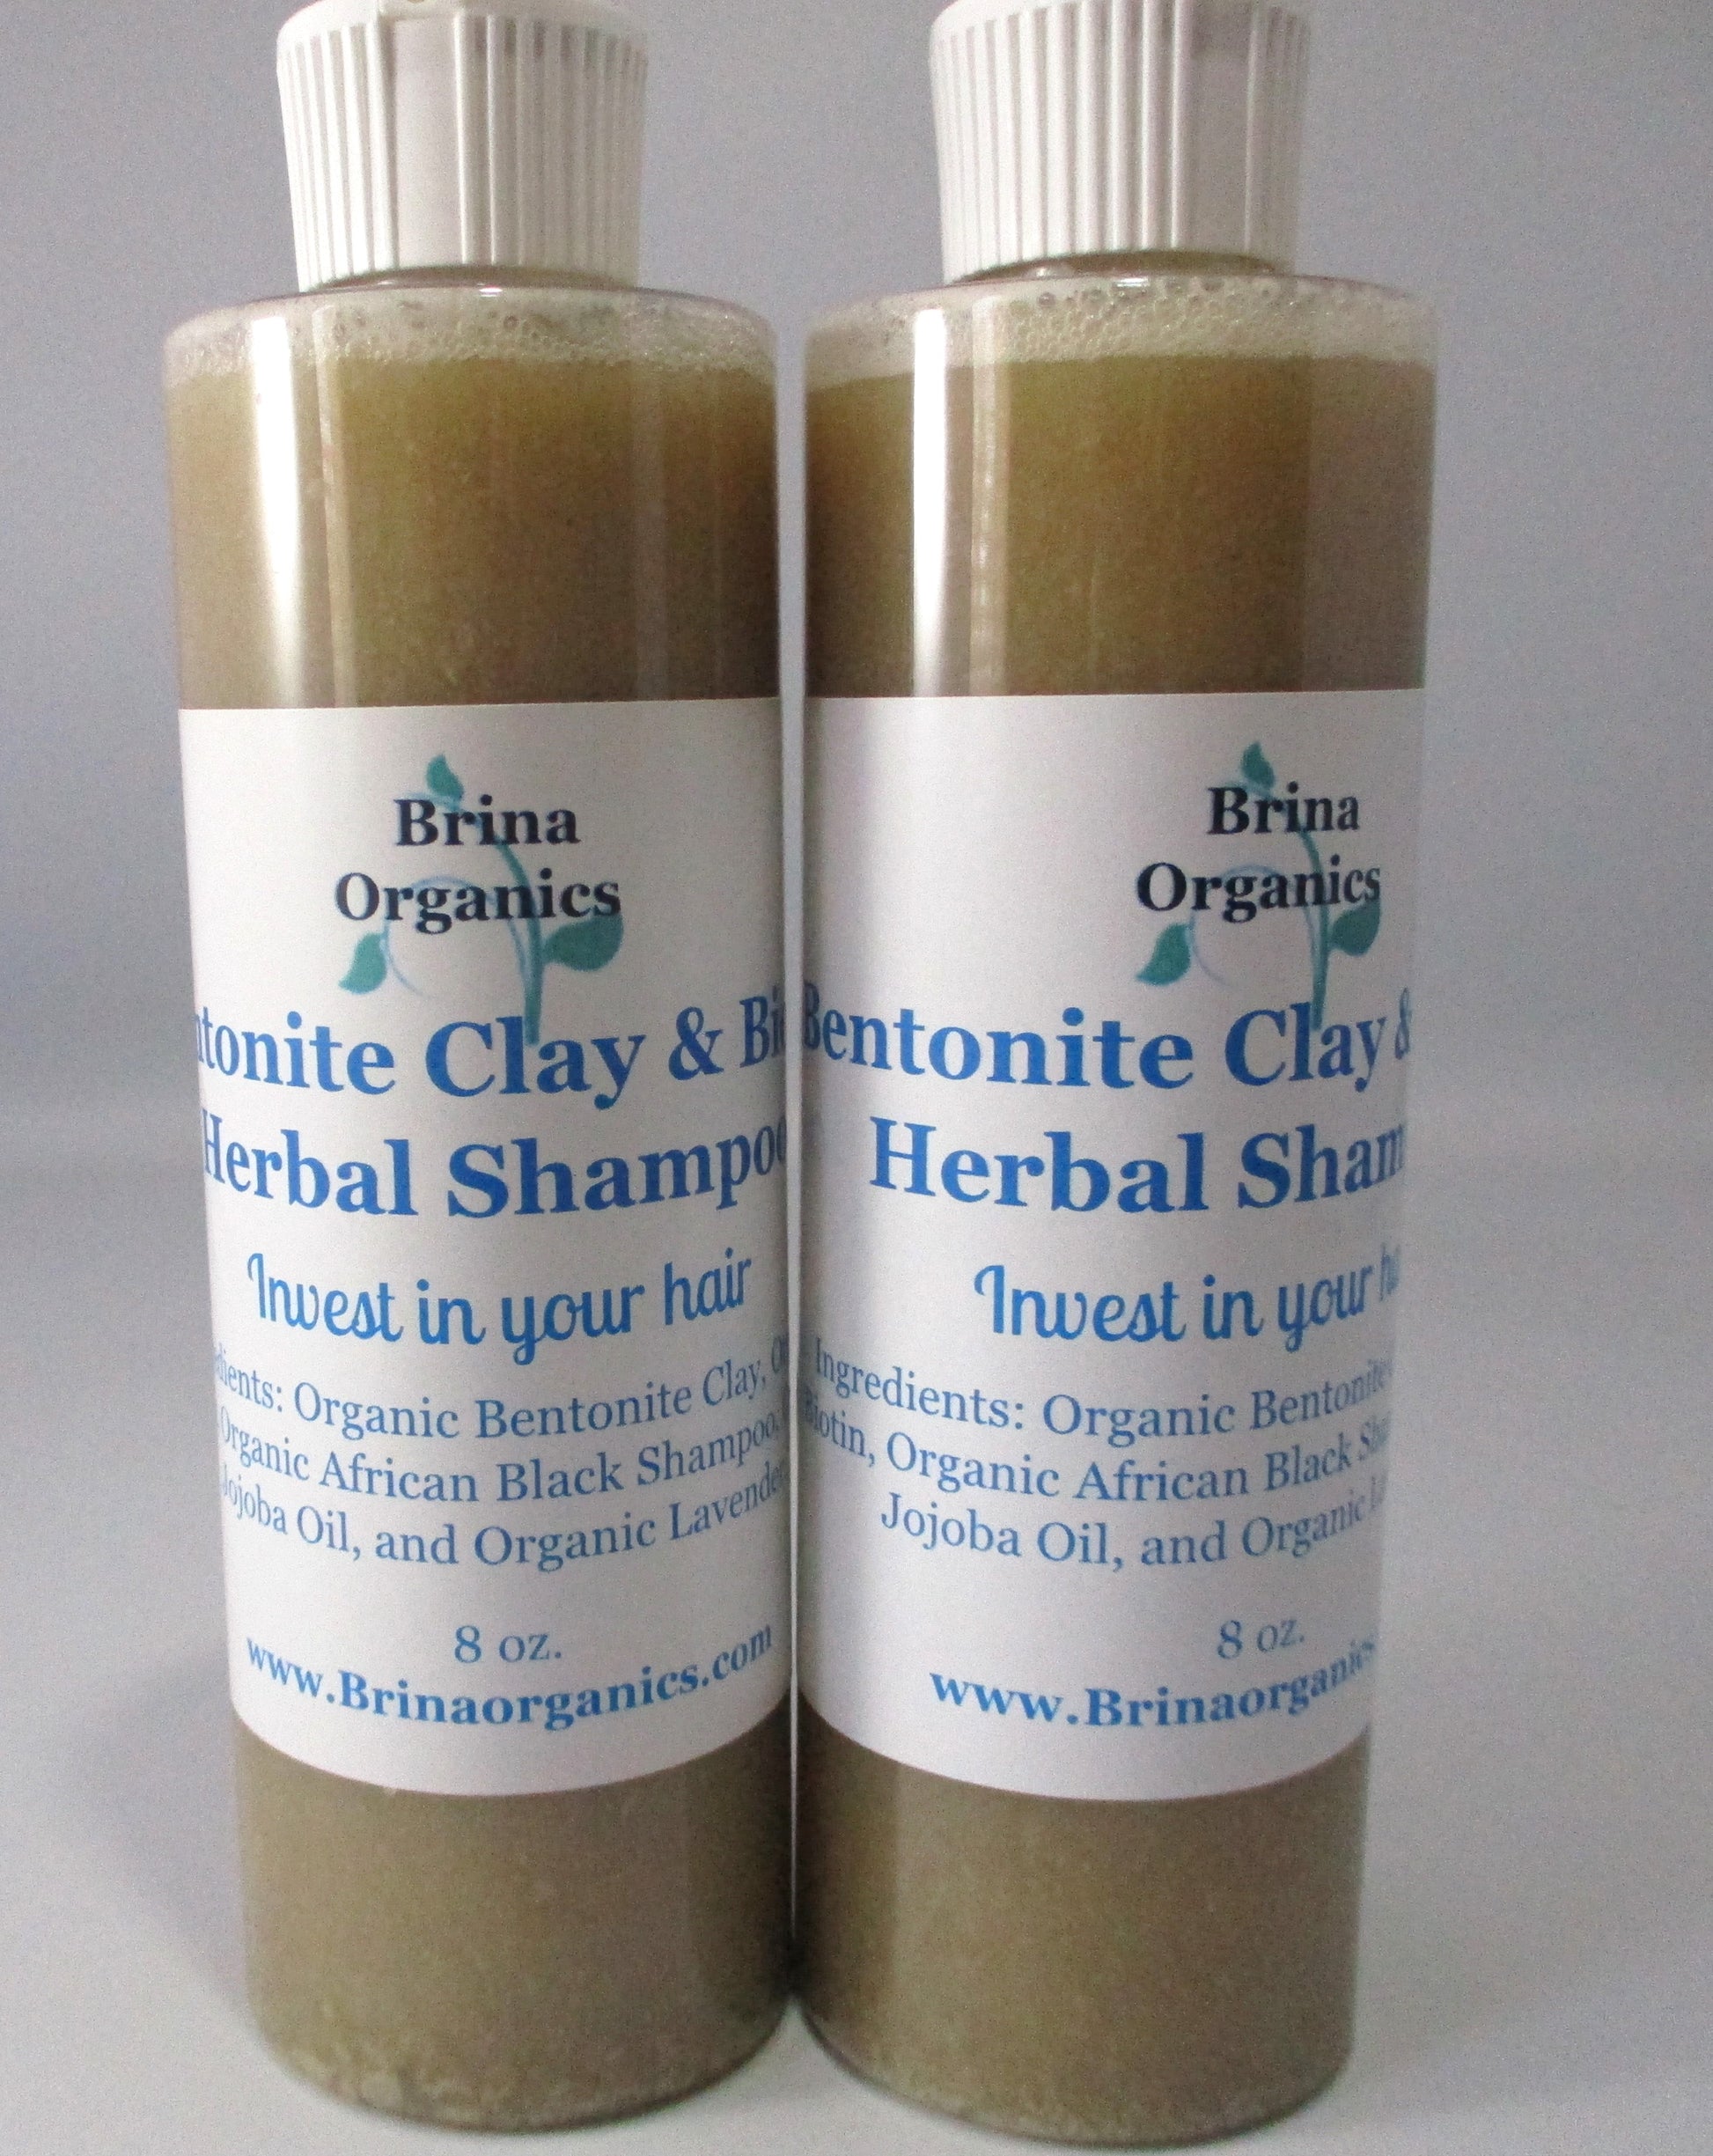 Continental gammel fjerkræ Bentonite Clay & Biotin Herbal Shampoo - Invest in your hair, Brina Or